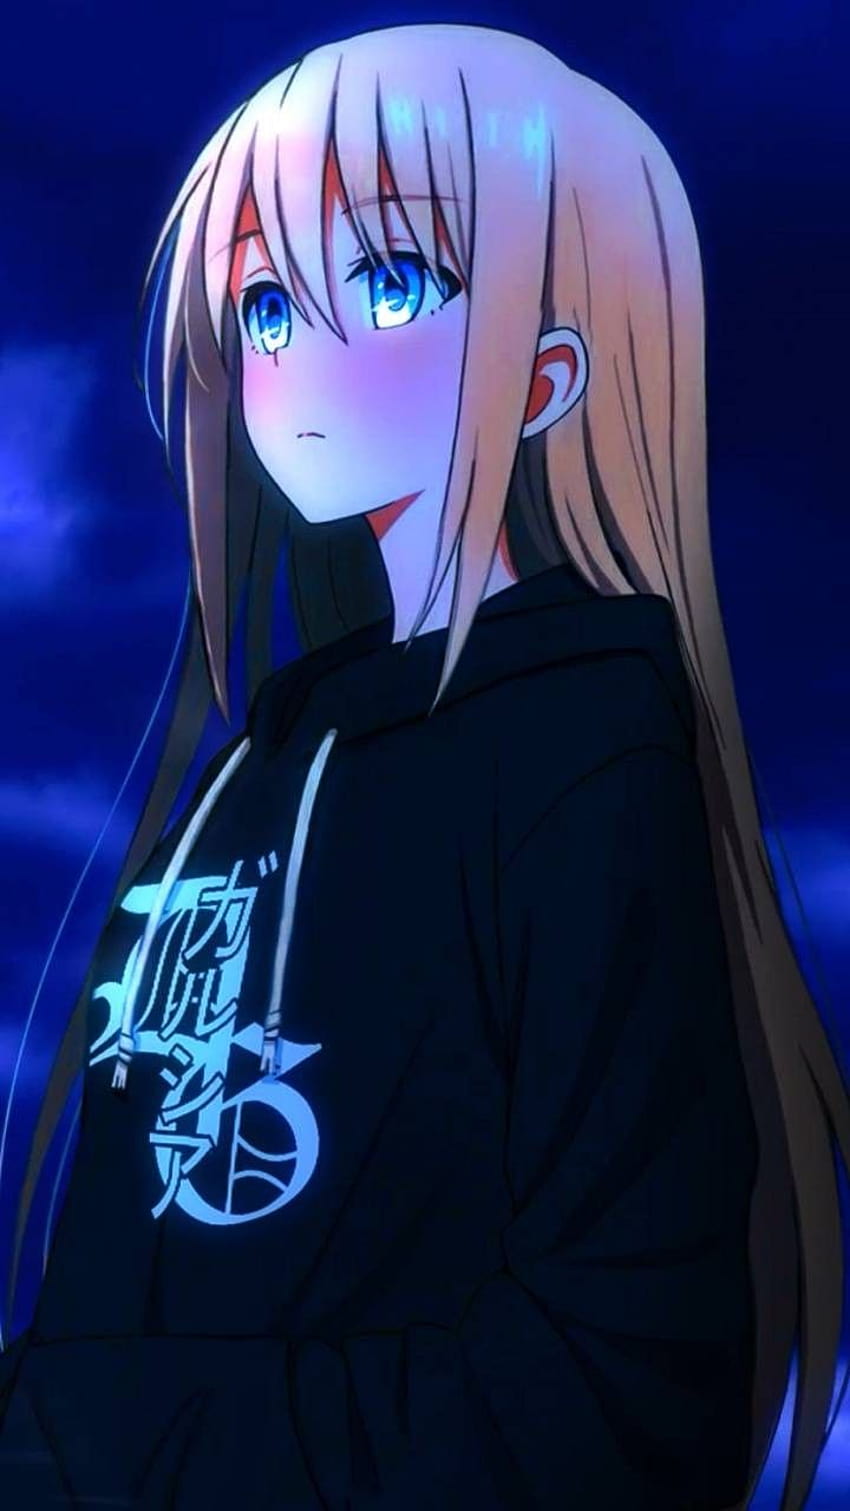 ] Gadis Anime Lucu, gadis sikap anime wallpaper ponsel HD